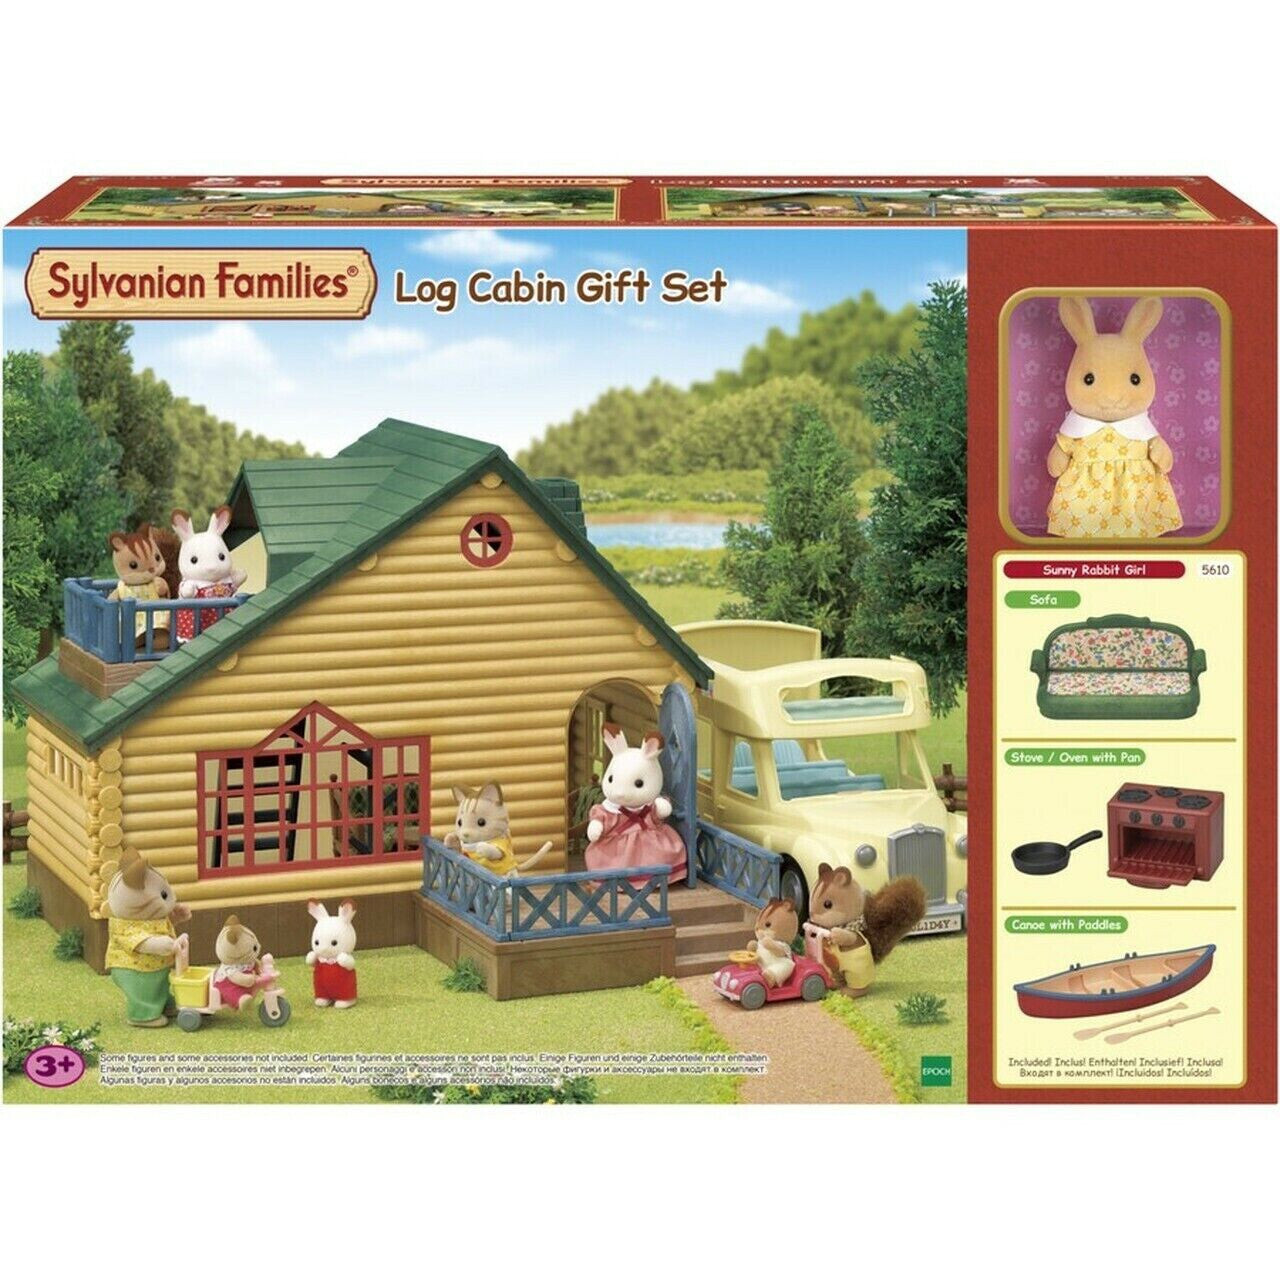 Sylvanian Families - Log Cabin Gift Set 5610